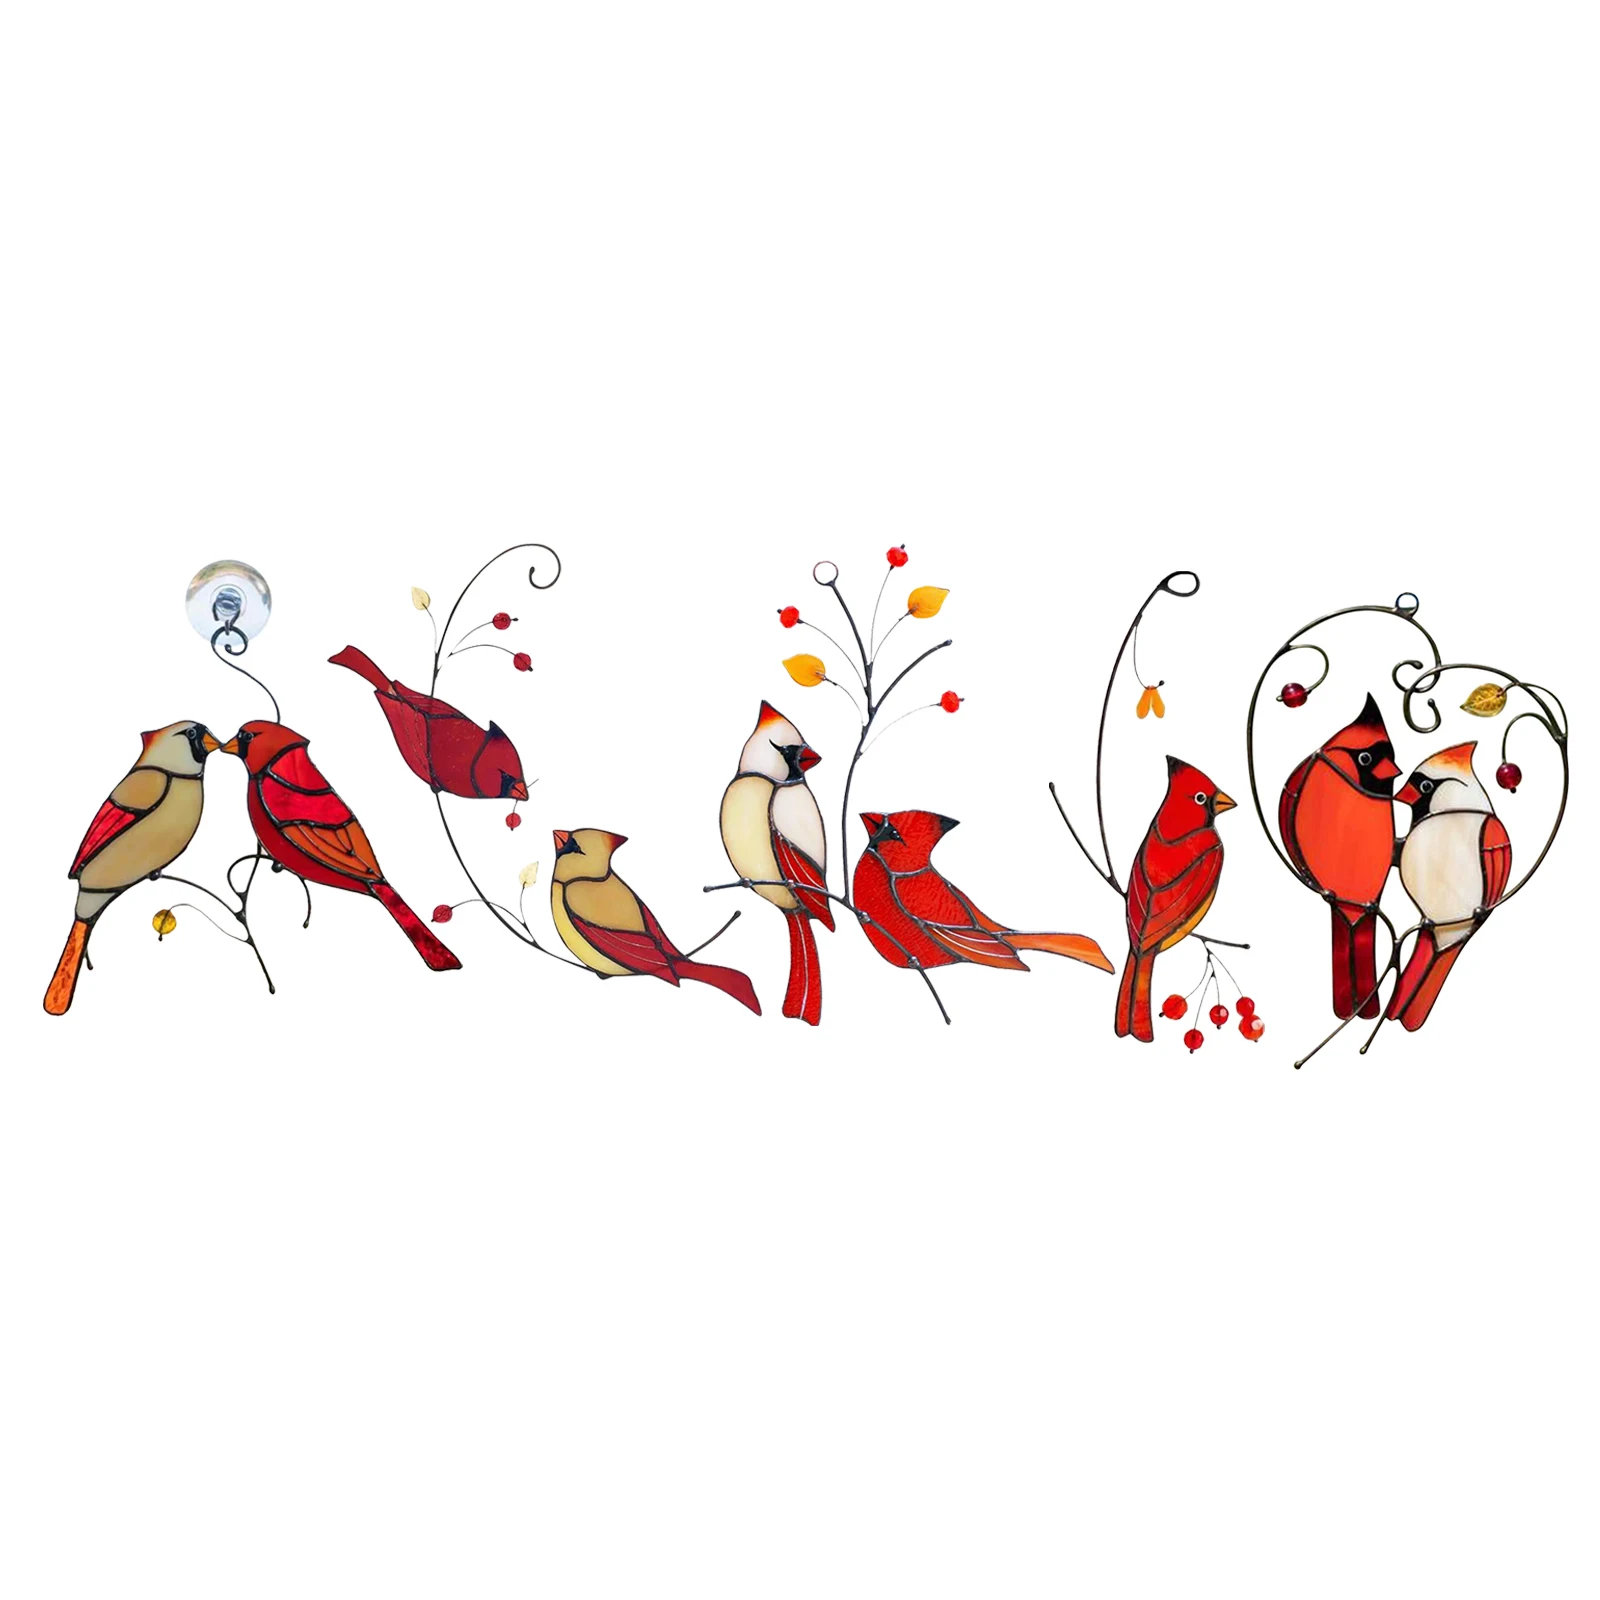 Wall Art Bird Sculpture ing Cardinal Sculpture Ornaments for Valnetine`s Day